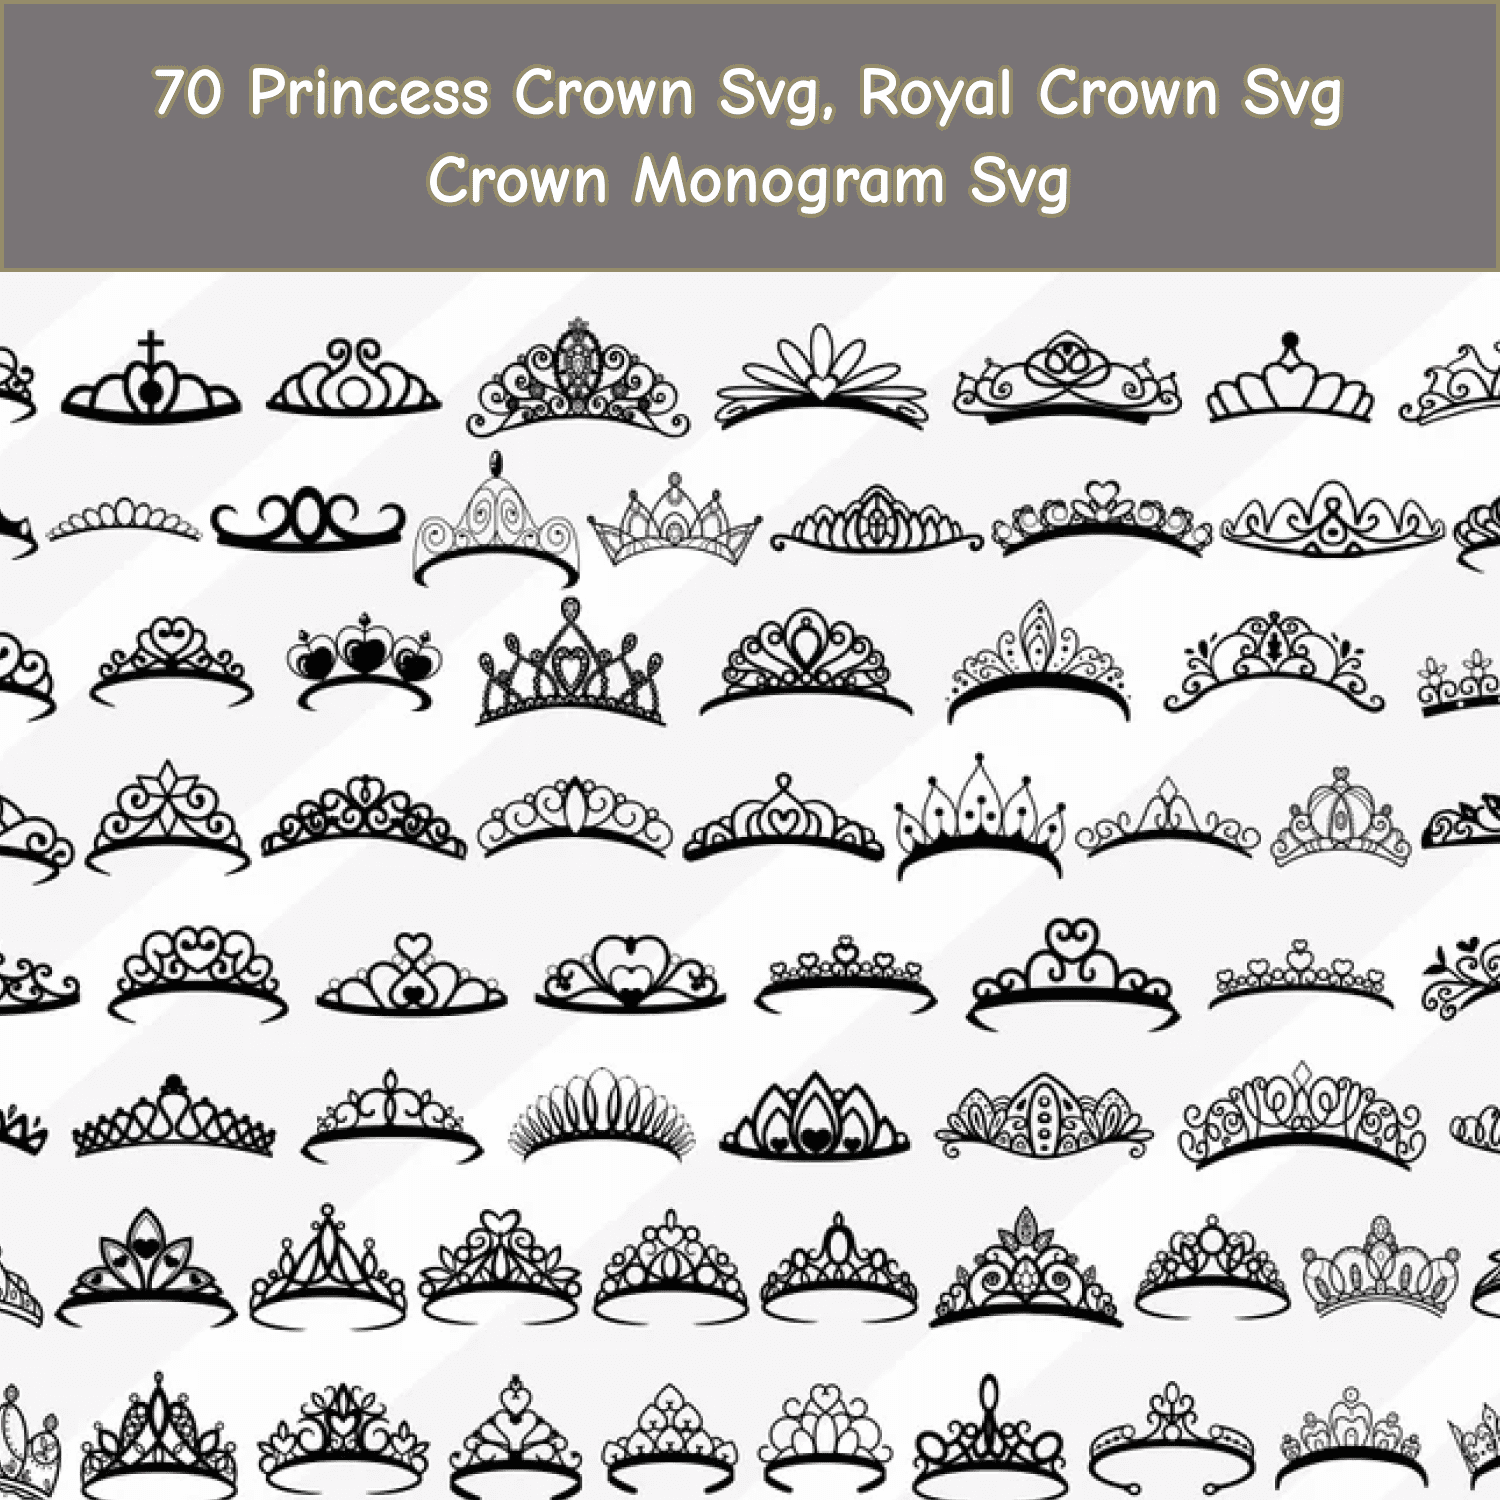 70 Princess Crown Monogram Svg image.